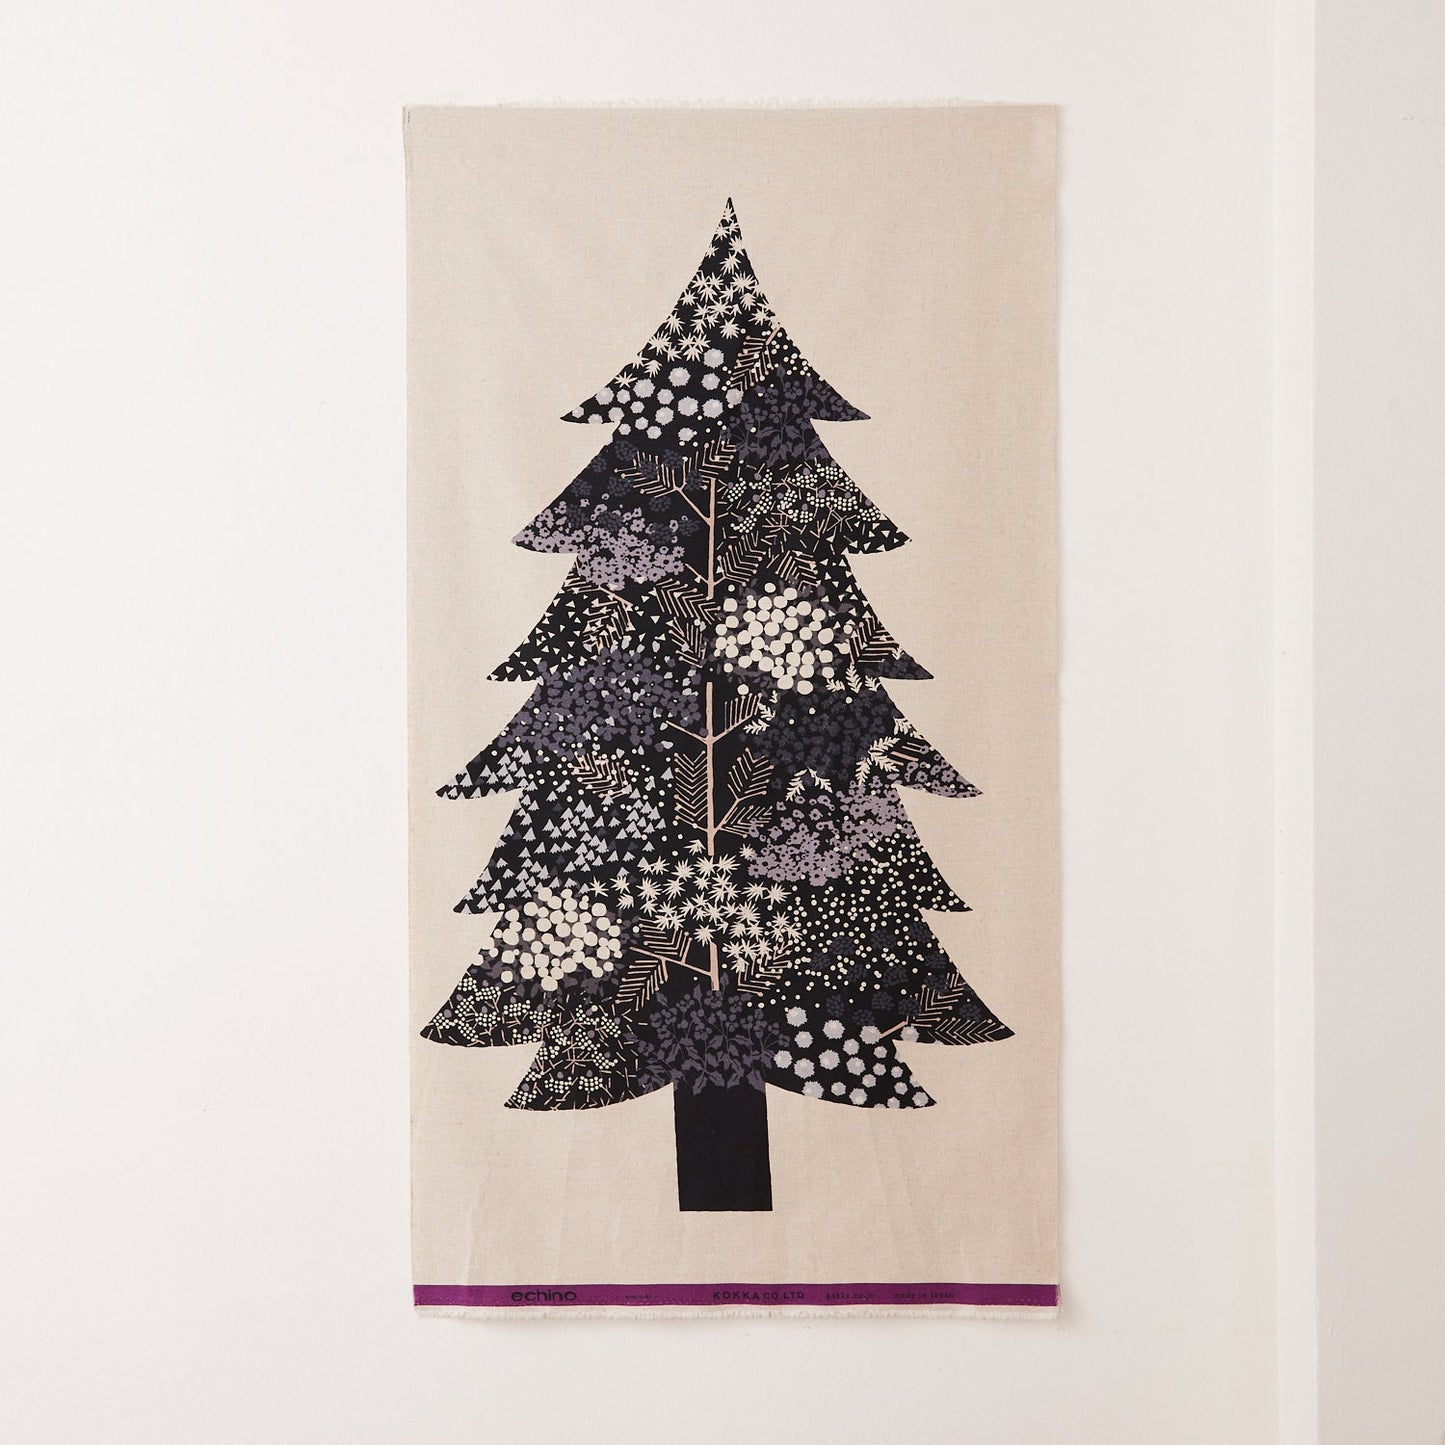 echino Christmas Tree mominoki Tapestry EKX-98040-40